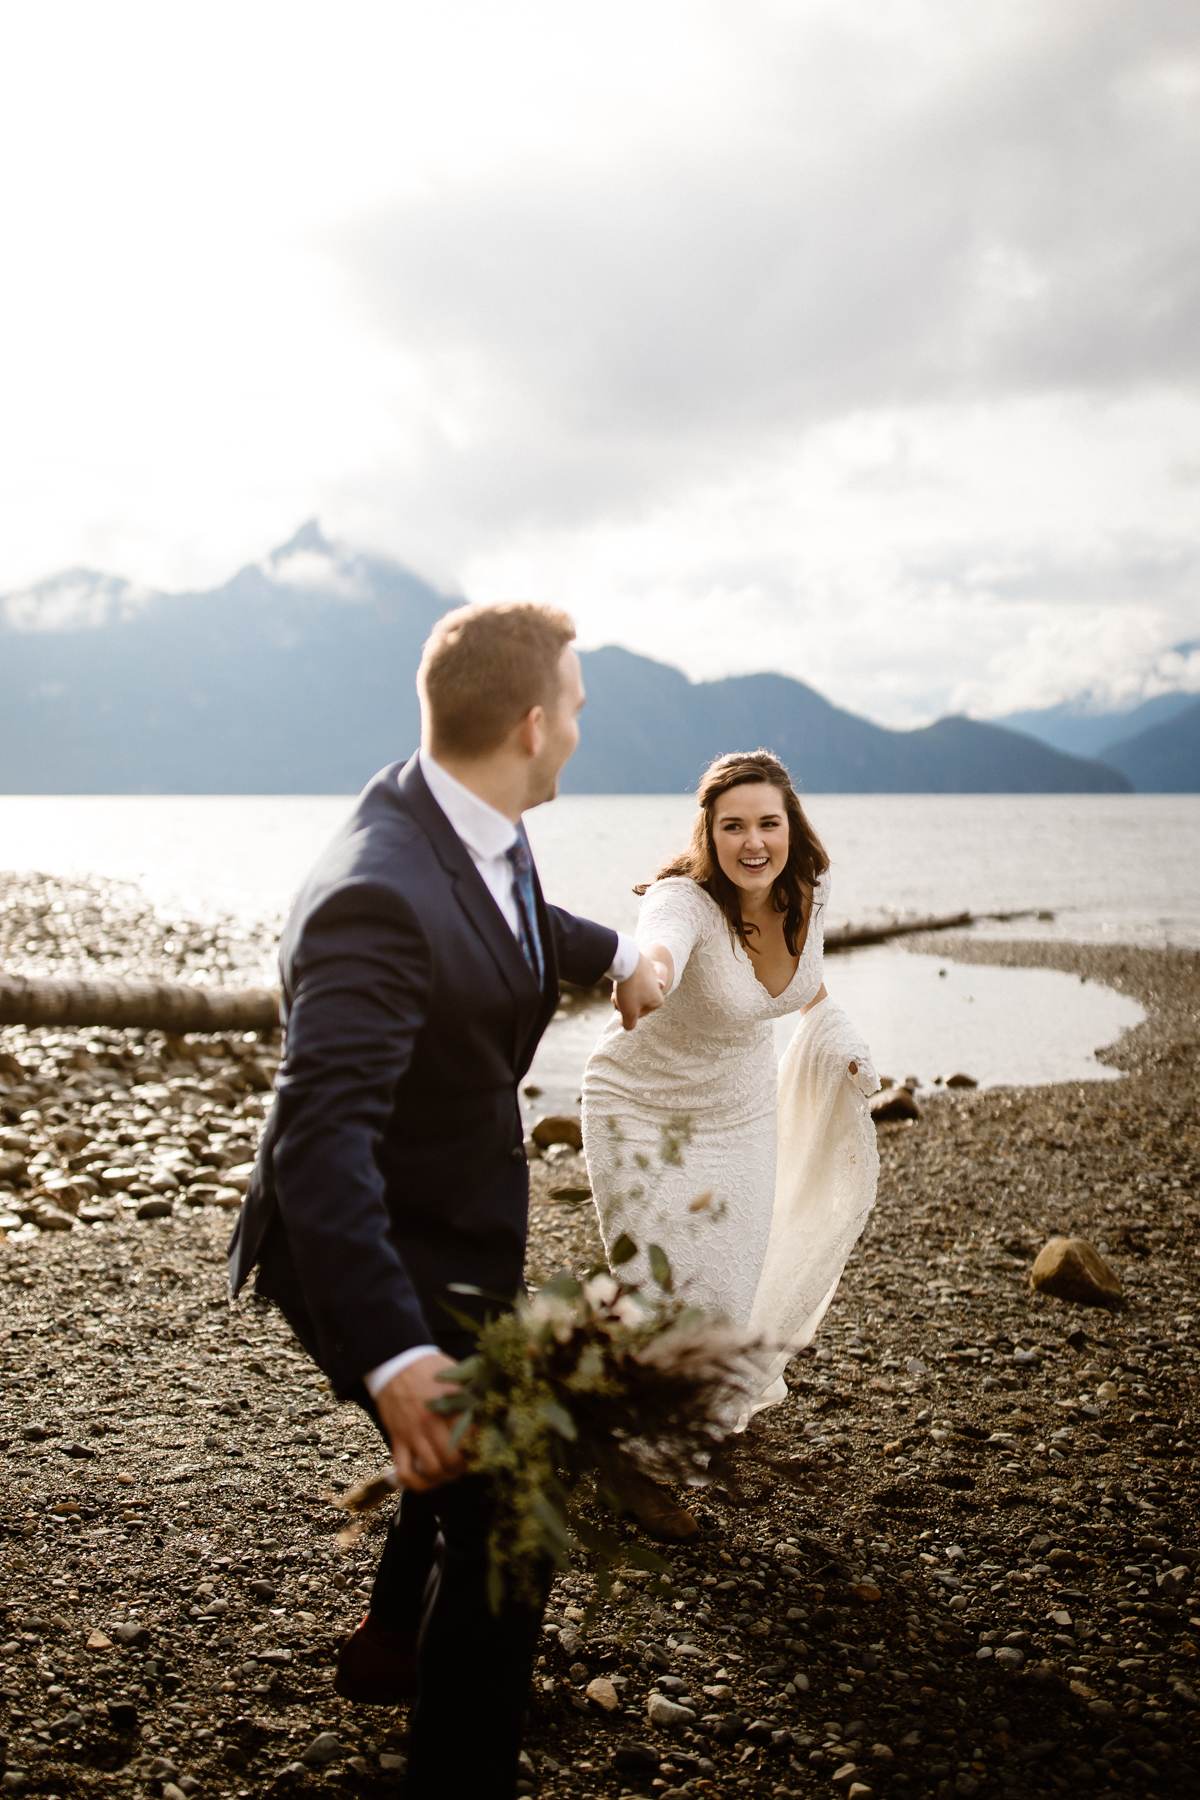 Squamish Wedding Photographers at an Adventurous Elopement - Image 22